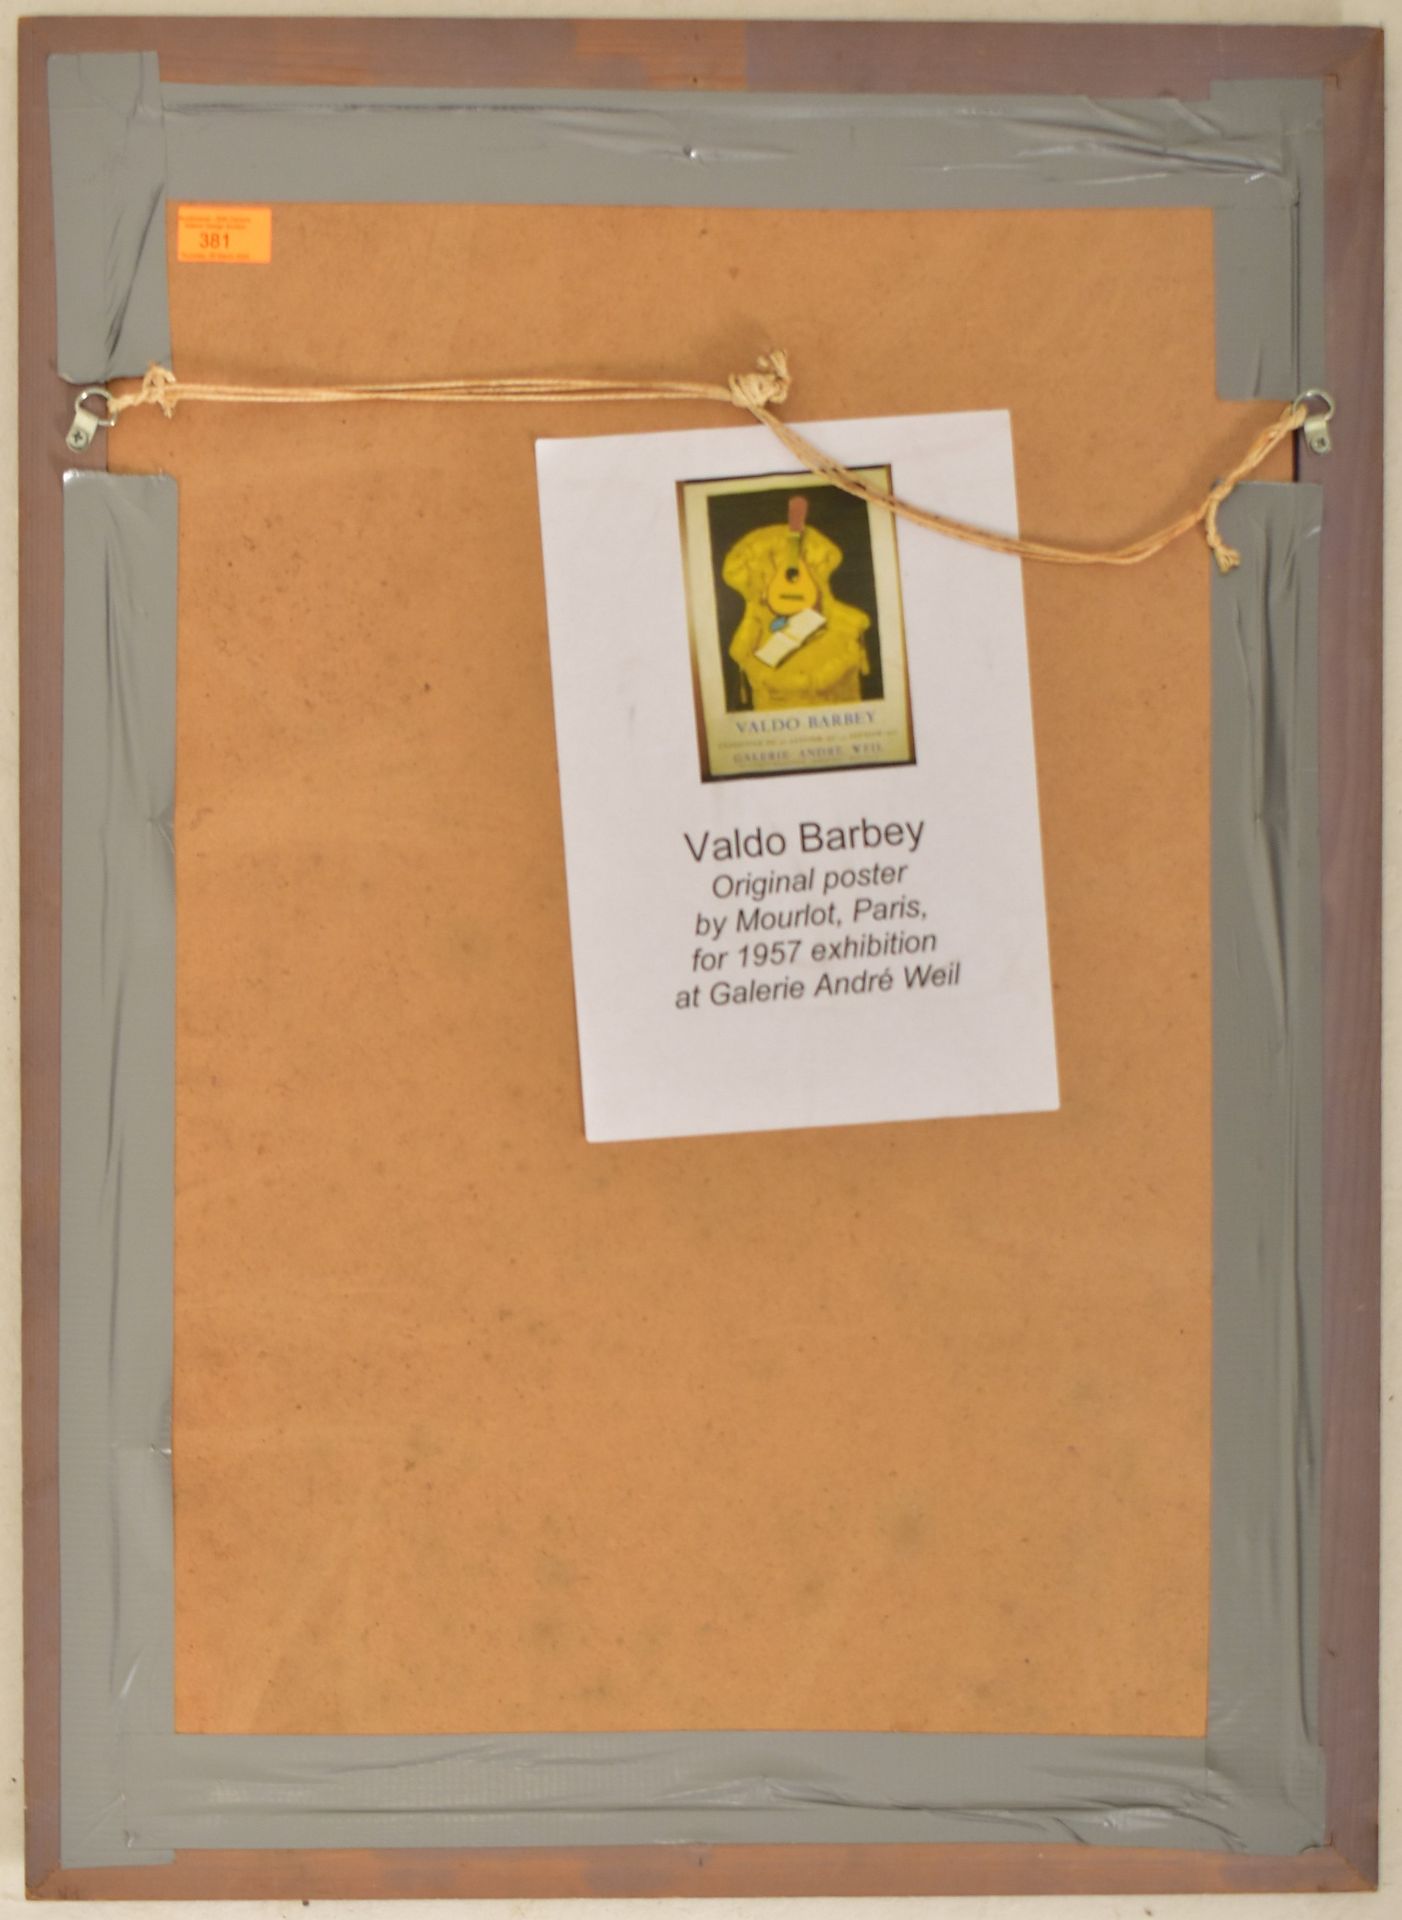 VALDO BARBEY - MID CENTURY EXHIBITION ADVERTISING POSTER - Image 4 of 4